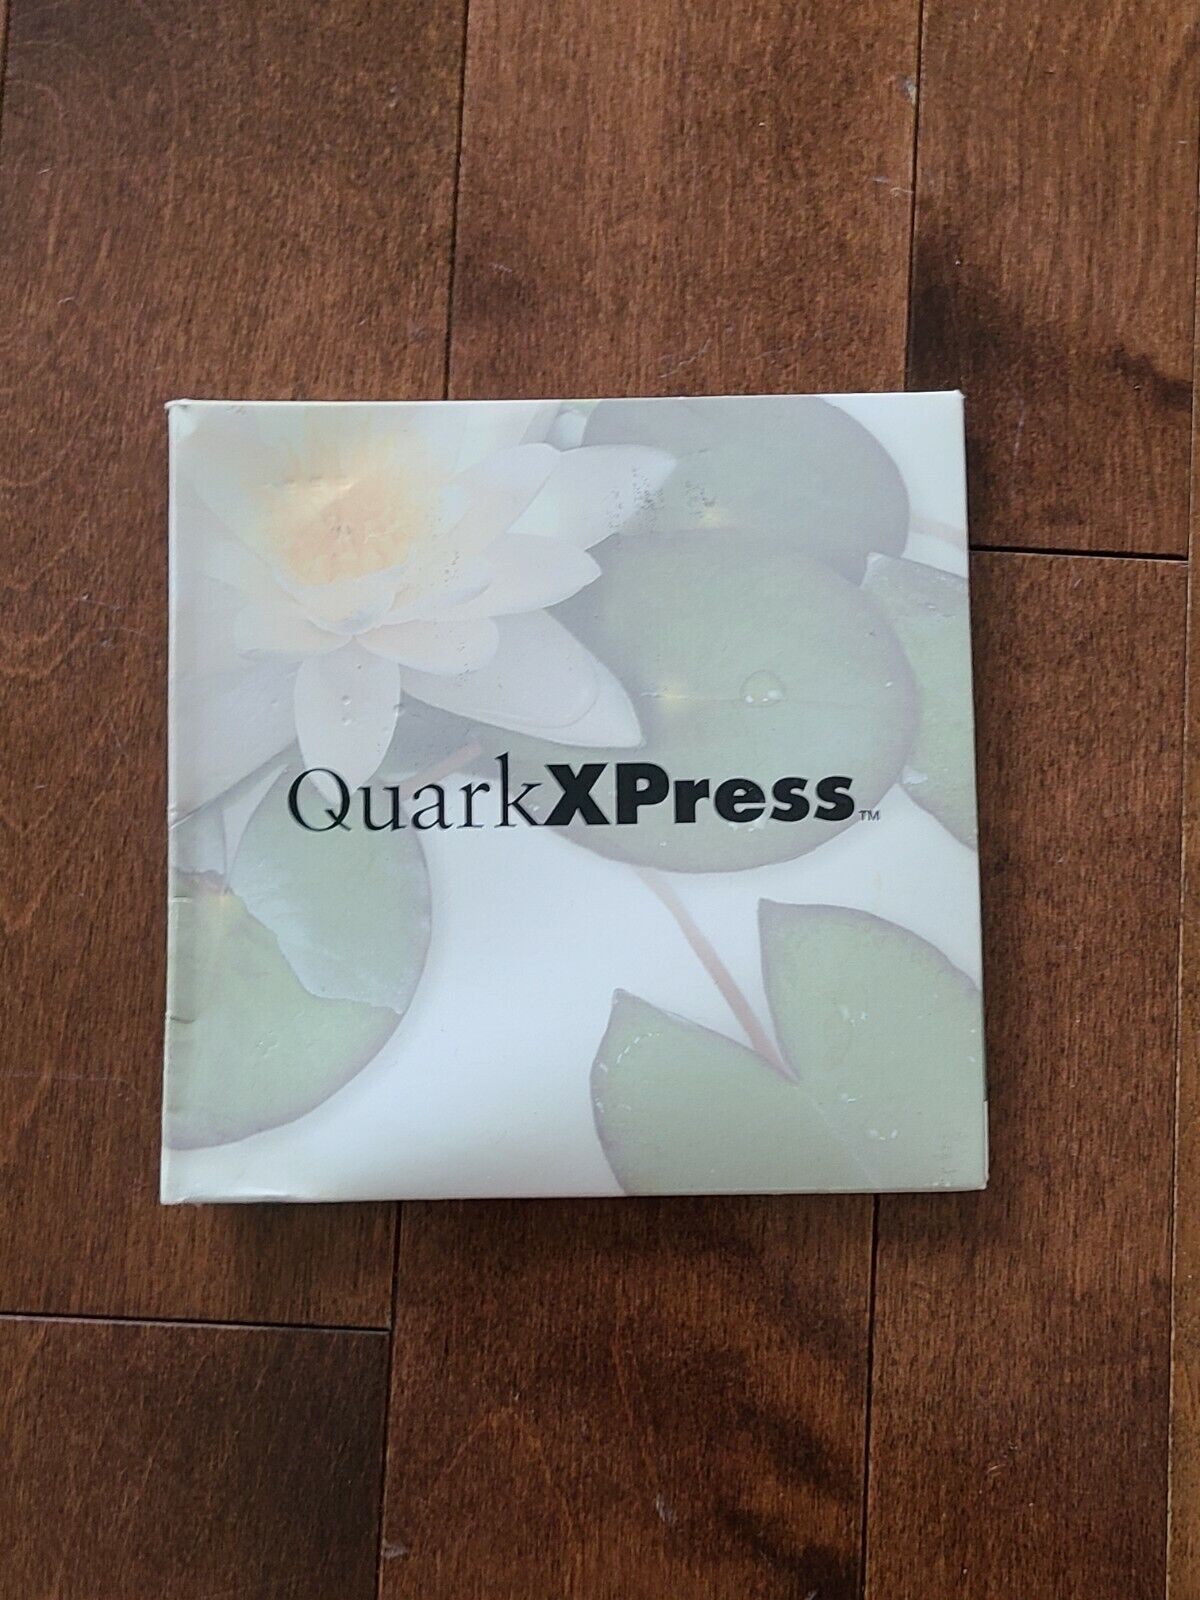 QuarkXPress 6.1 PC CD Writing Editing Images Projects Publishing 